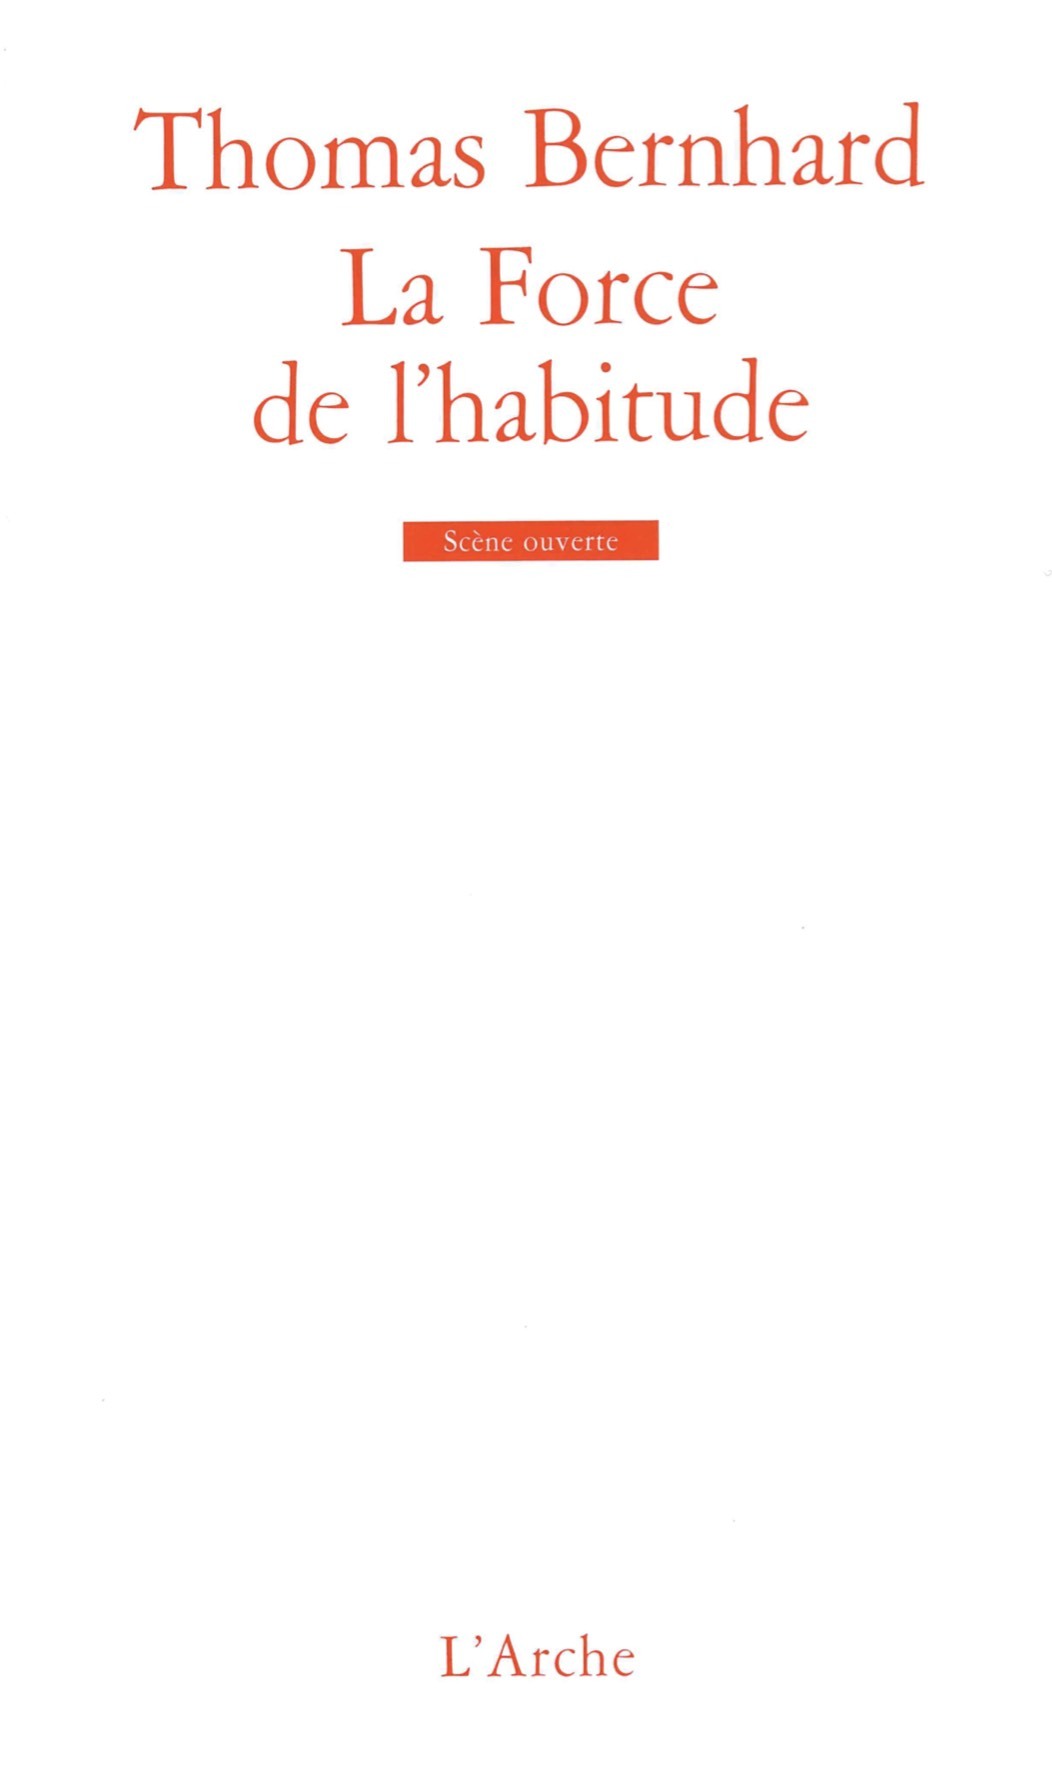 La Force de L'habitude (9782851810304-front-cover)